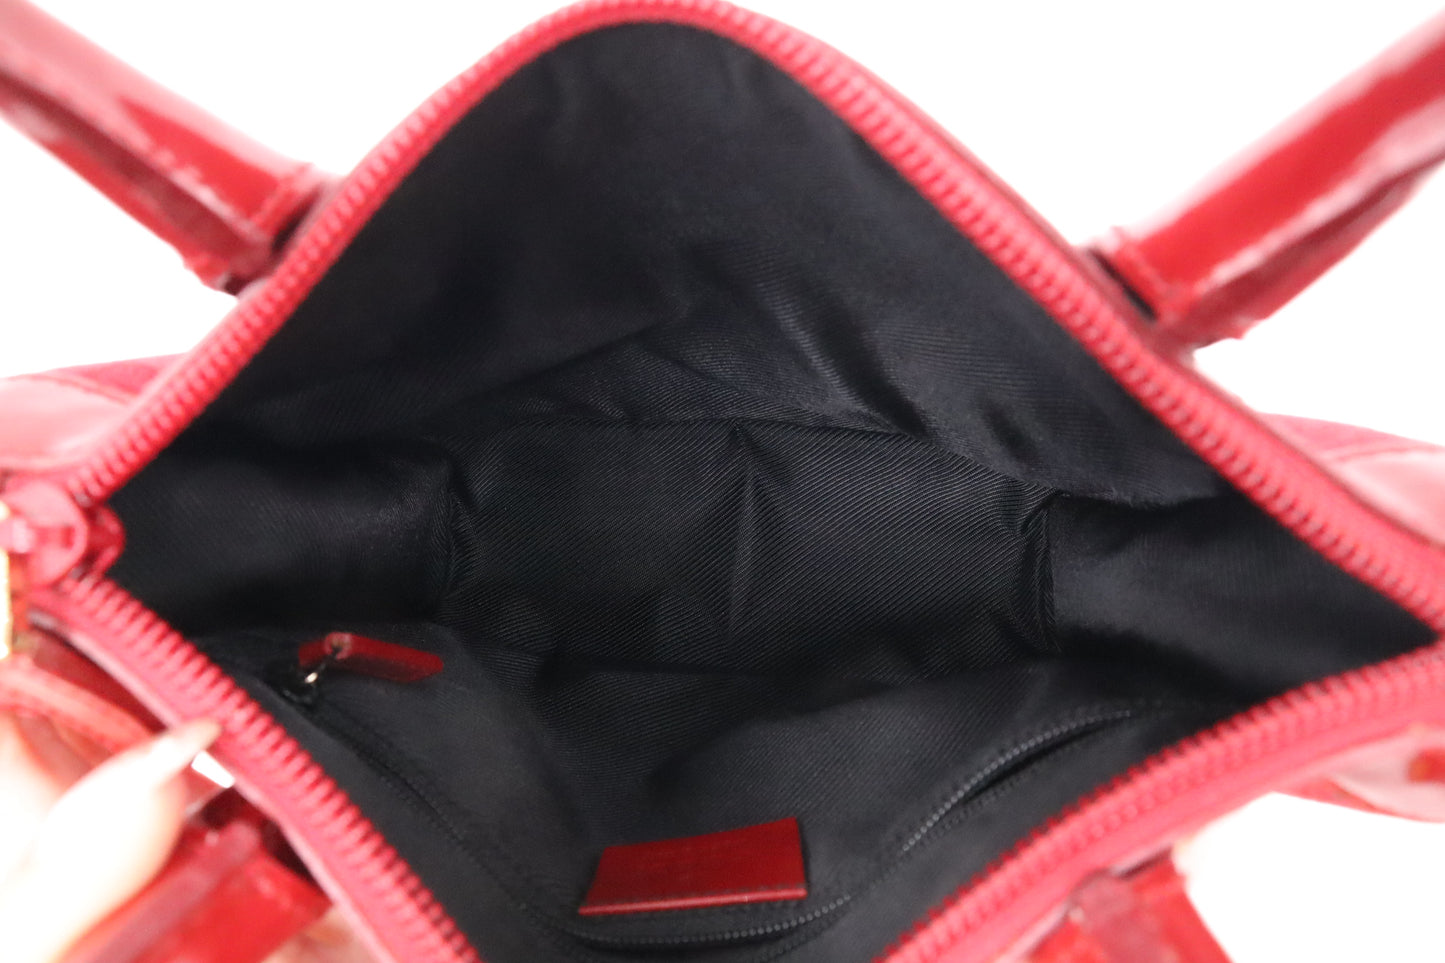 Gucci Handbag in GG Red Canvas